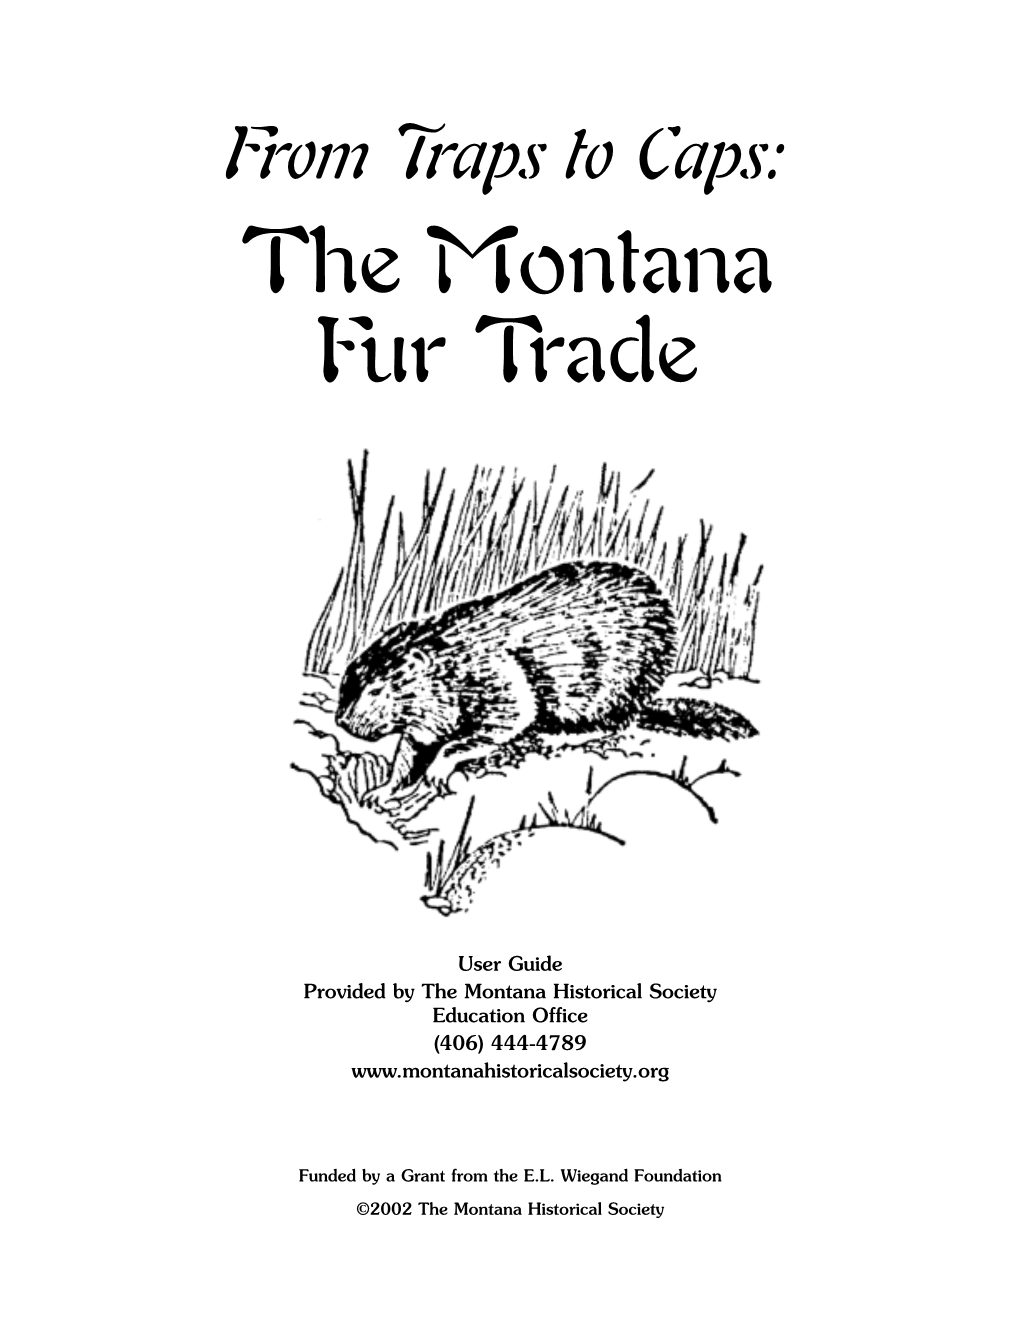 The Montana Fur Trade